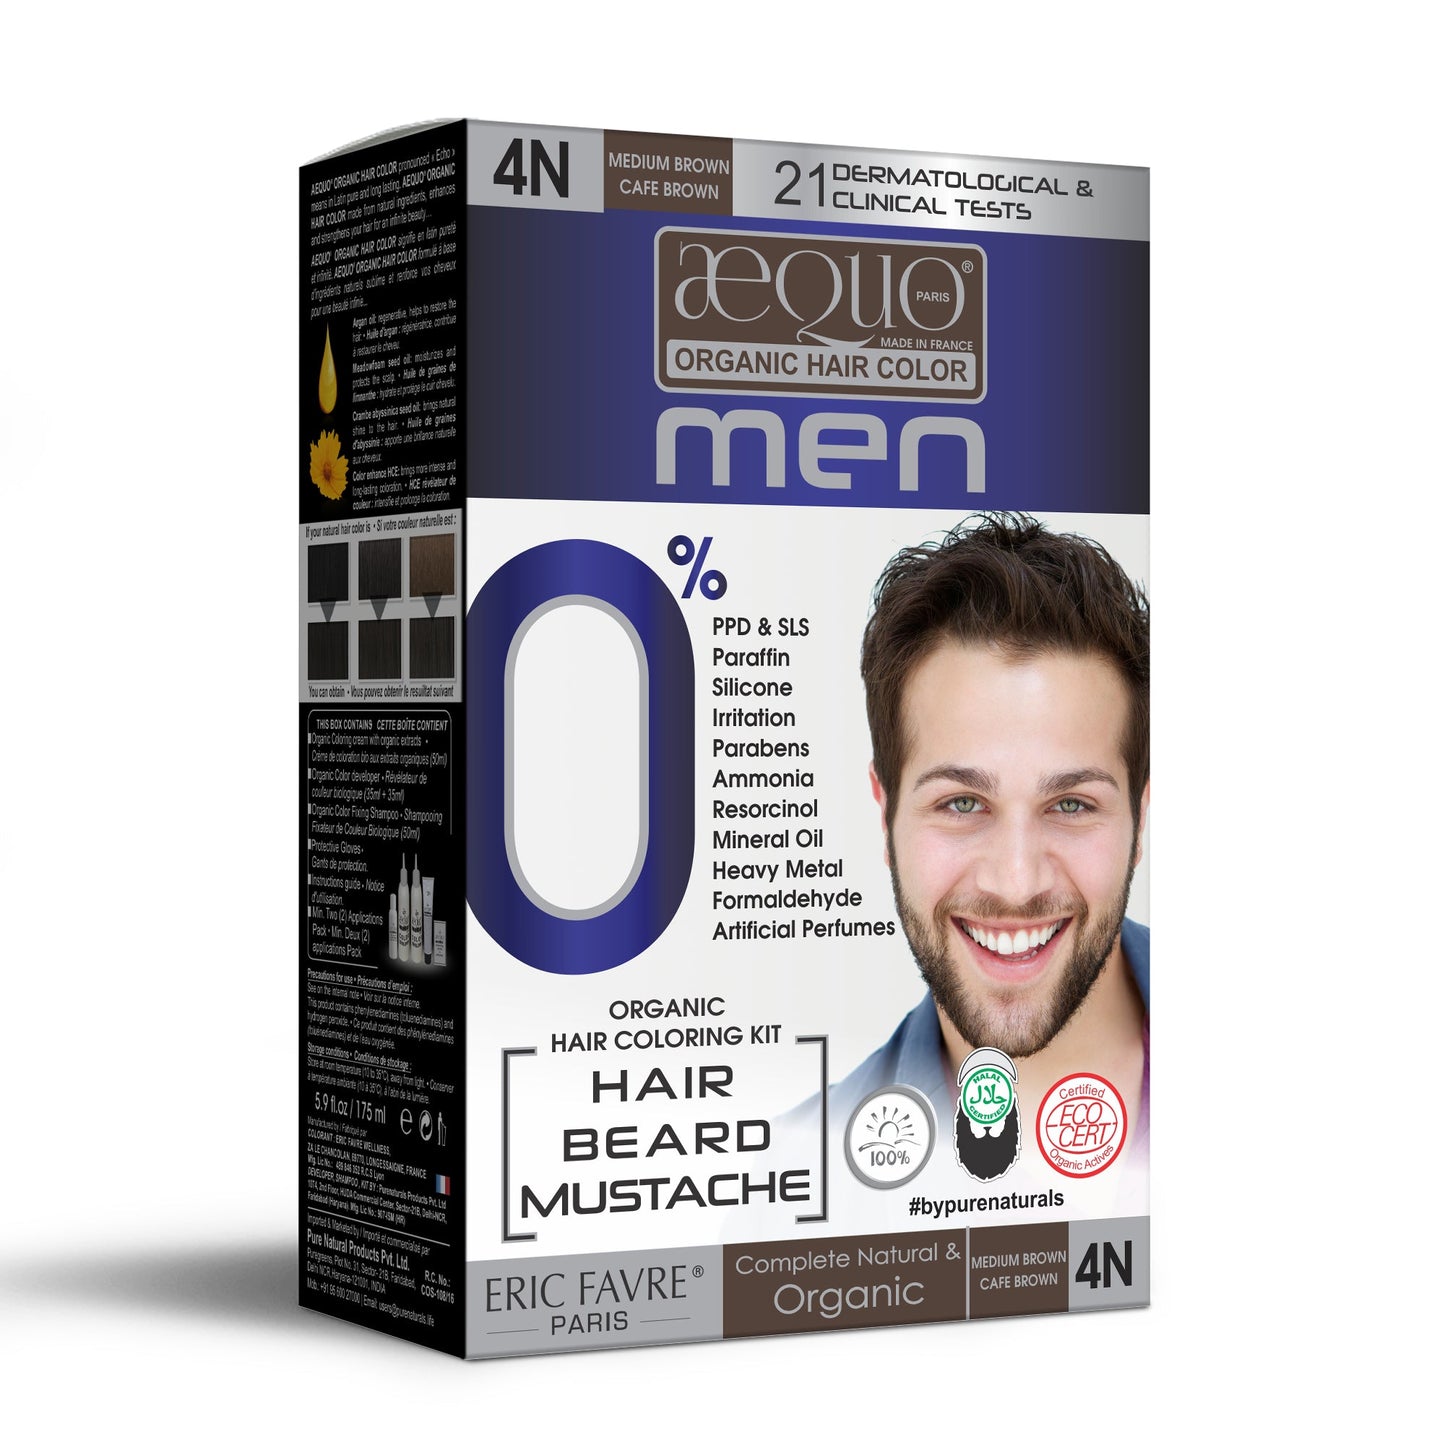 Aequo Organic 4N Medium Brown Free Organic Hair Beard Mustache Color 170ml for Men